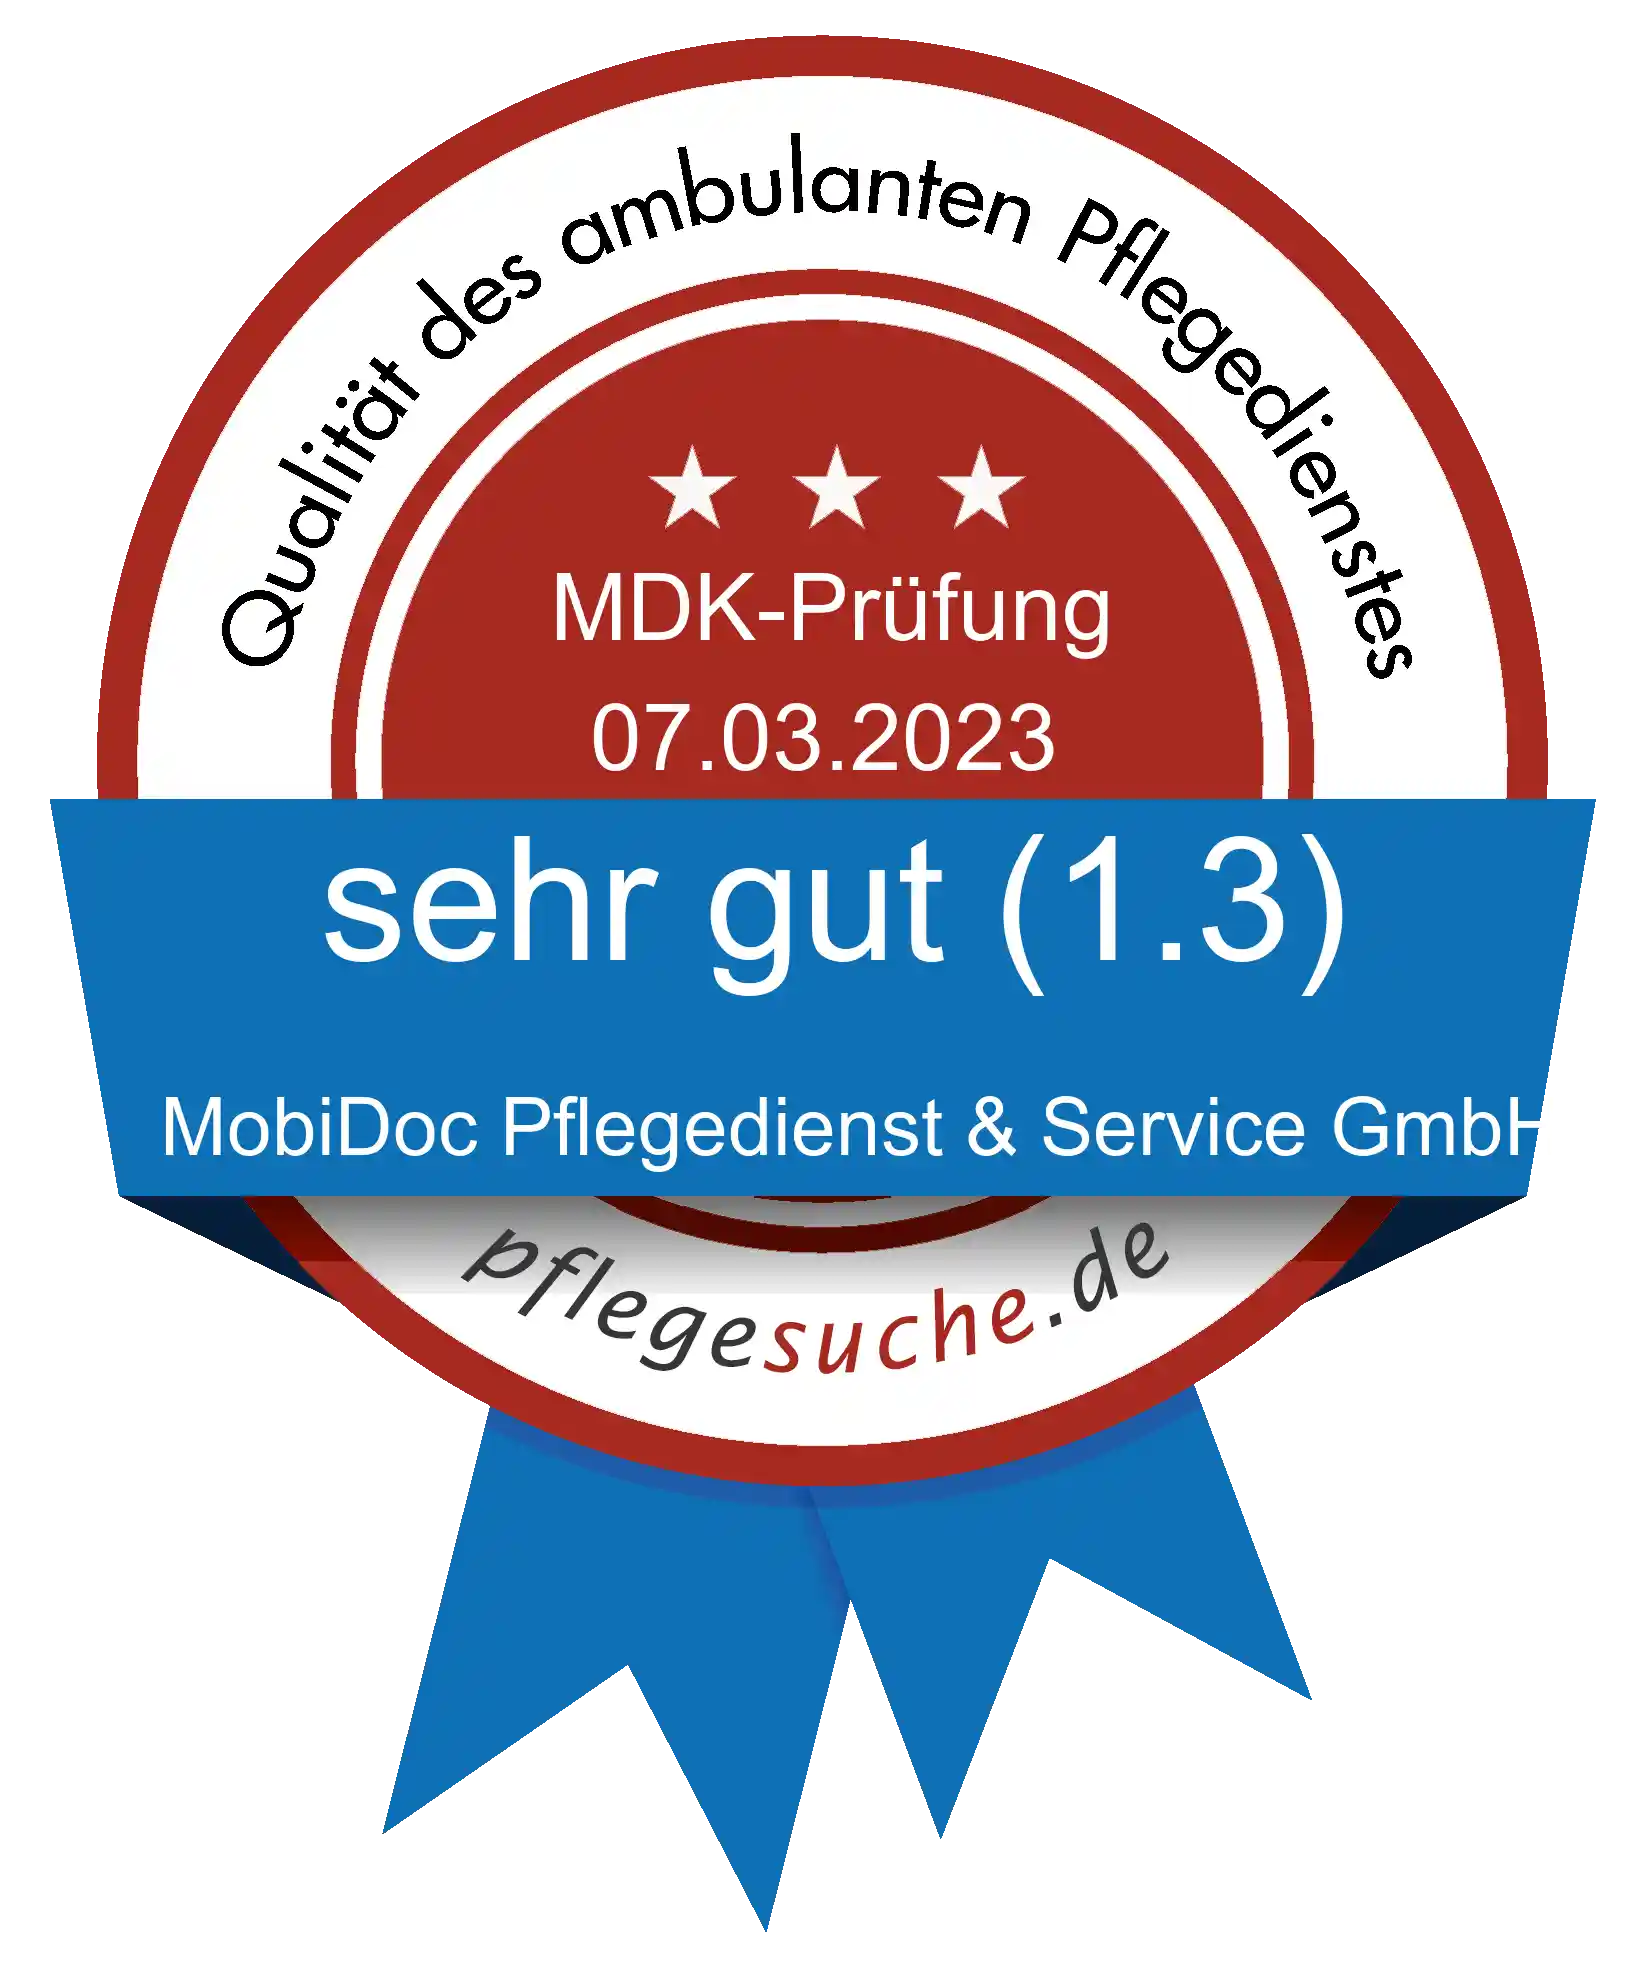 Siegel Benotung: MobiDoc Pflegedienst & Service GmbH